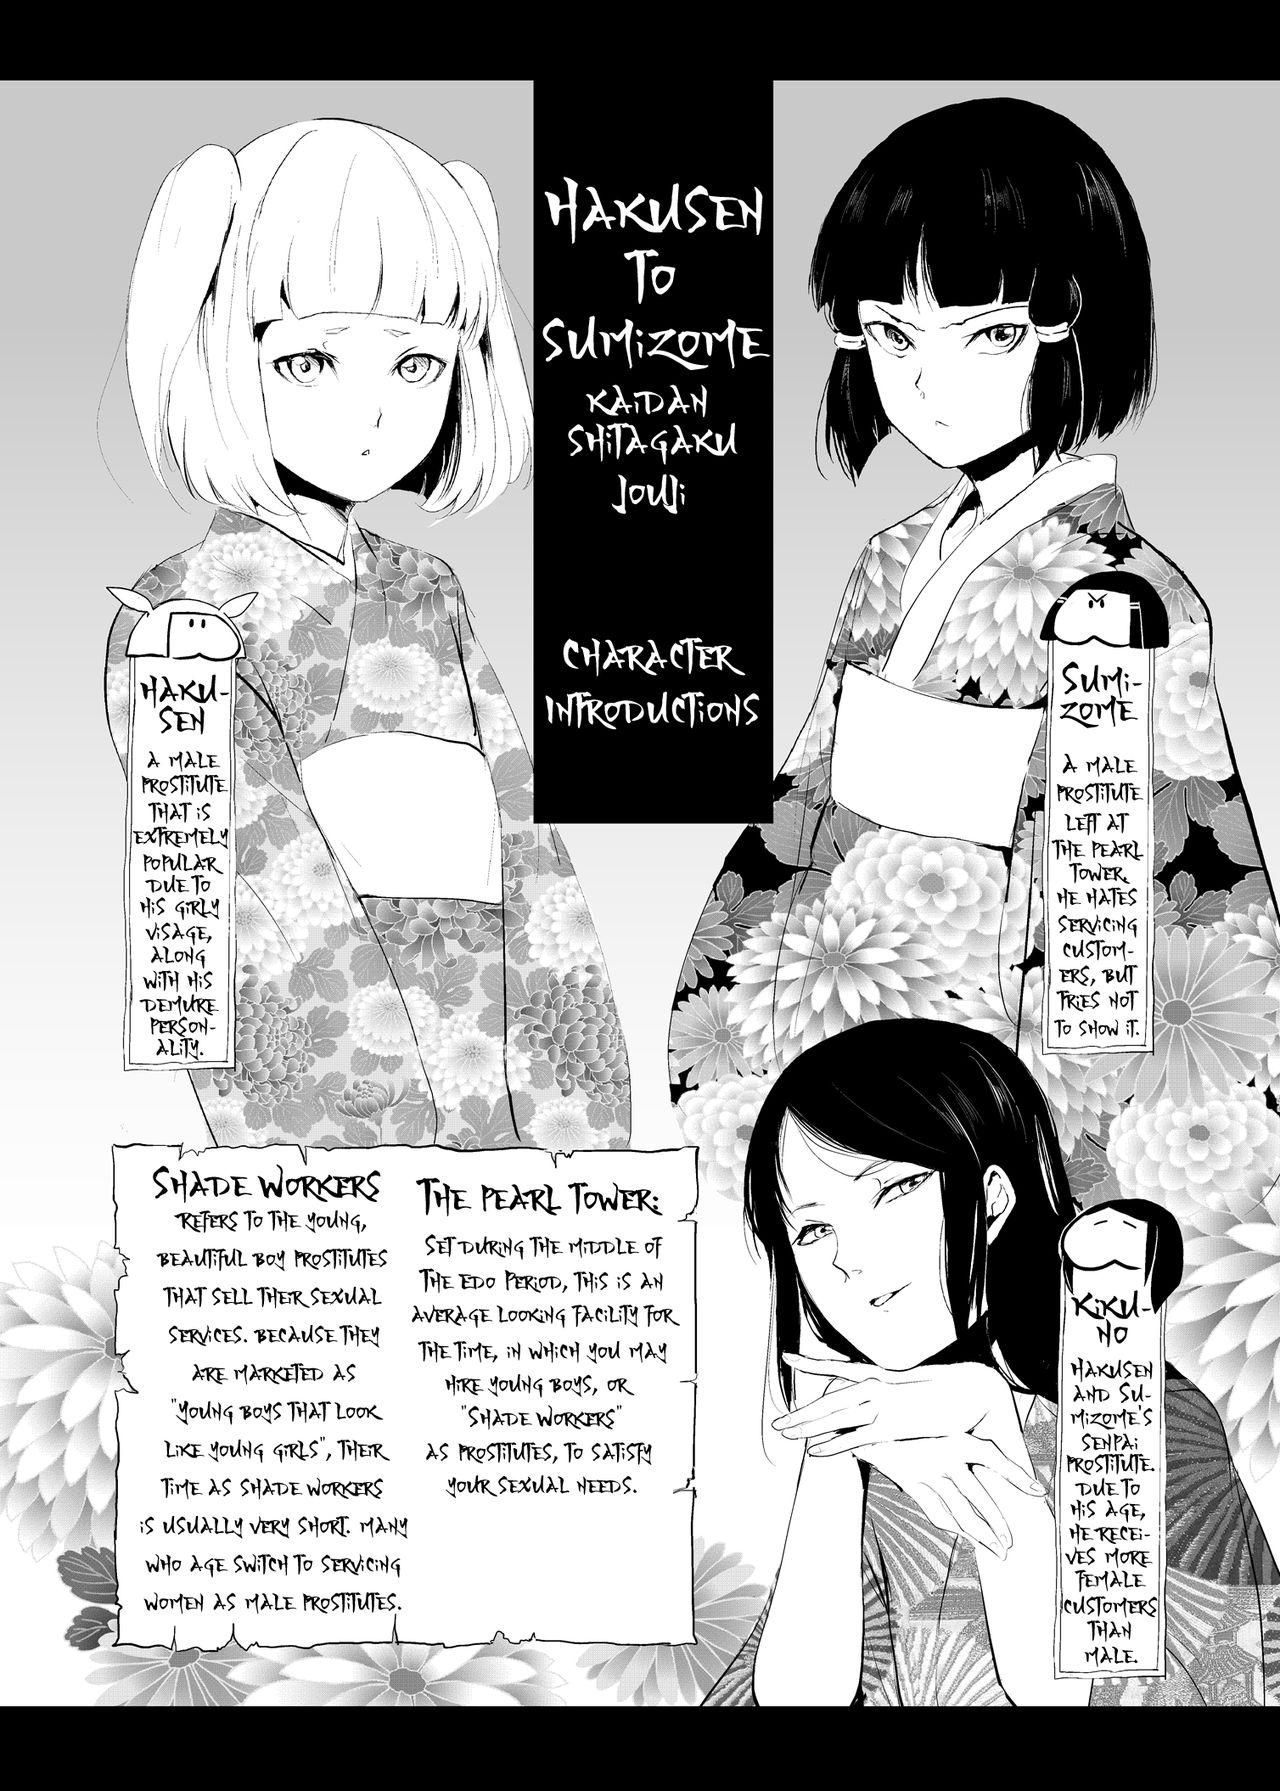 Chunky Hakusen to Sumizome Kaidan Shitagaku Jouji Lesbians - Page 2